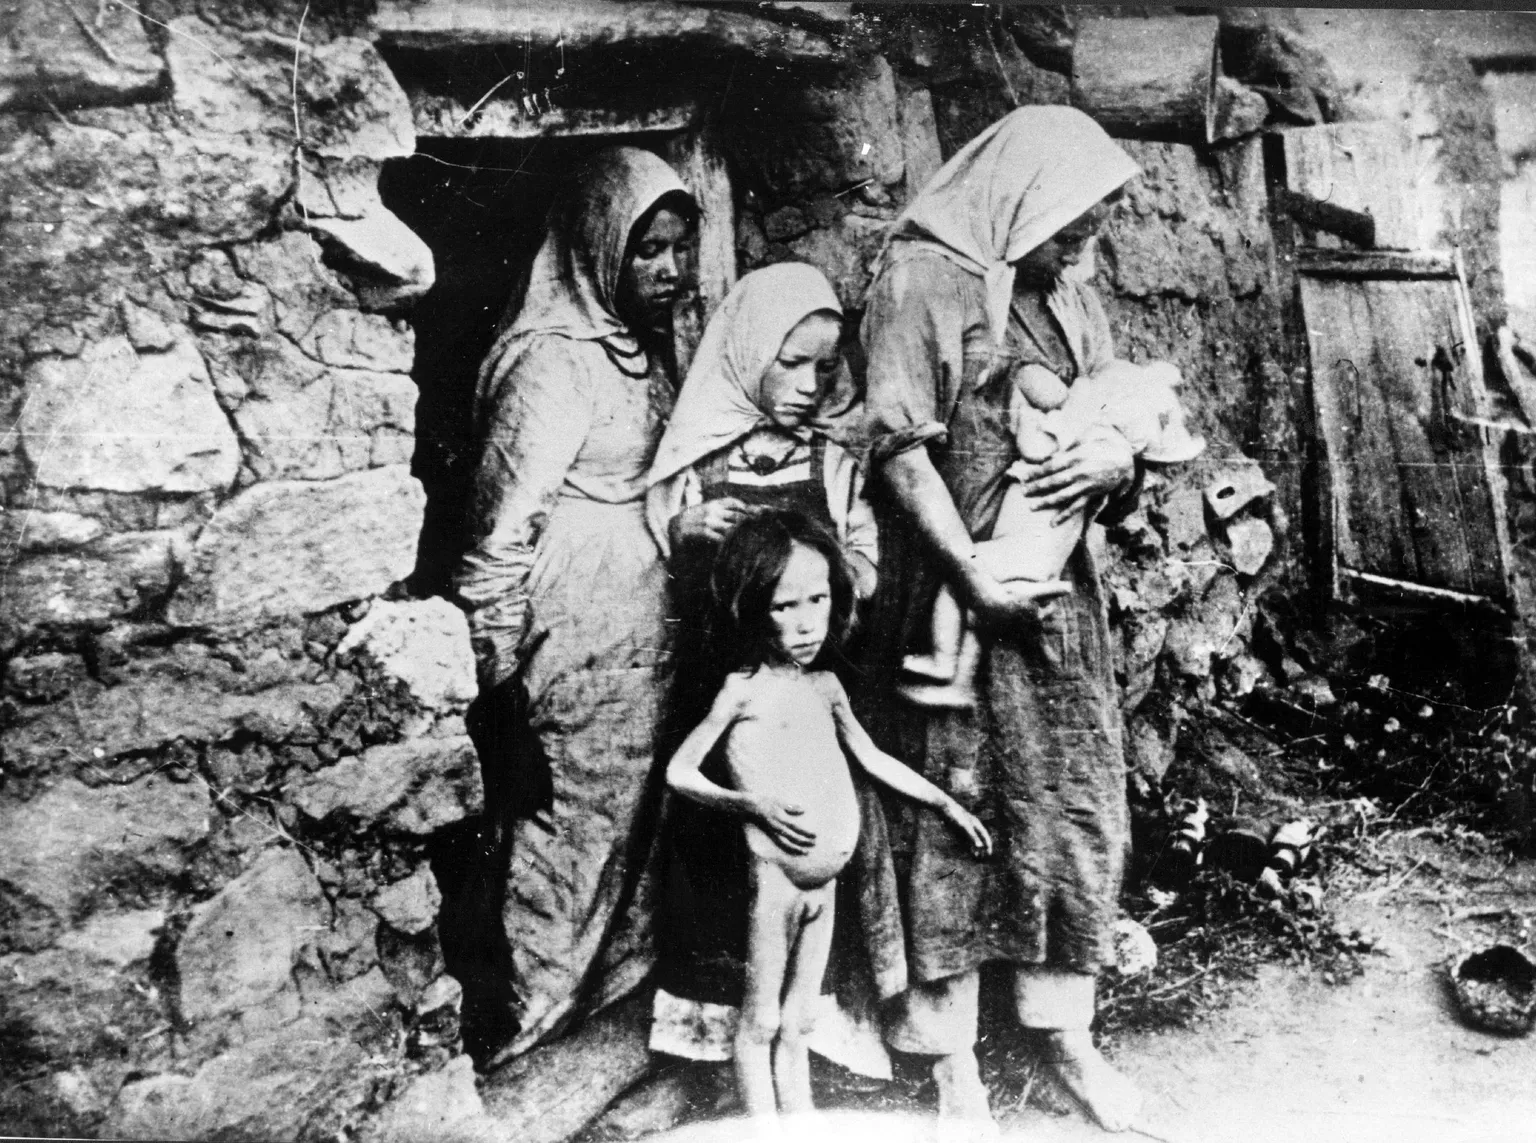 Venemaa, 1920. Nälgiv perekond.